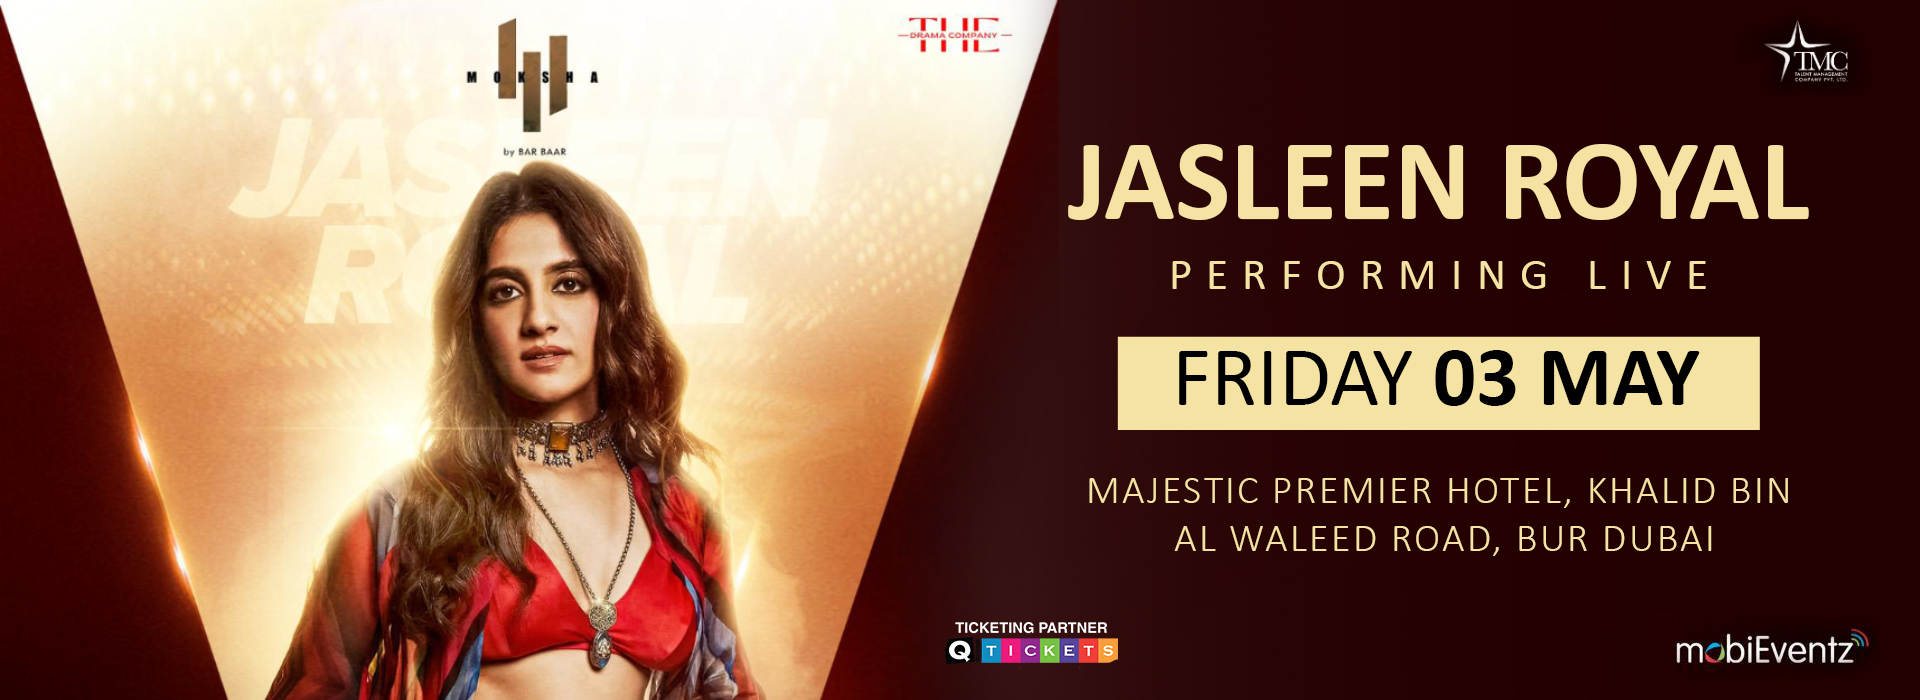 Jasleen Royal Live | Just Dubai